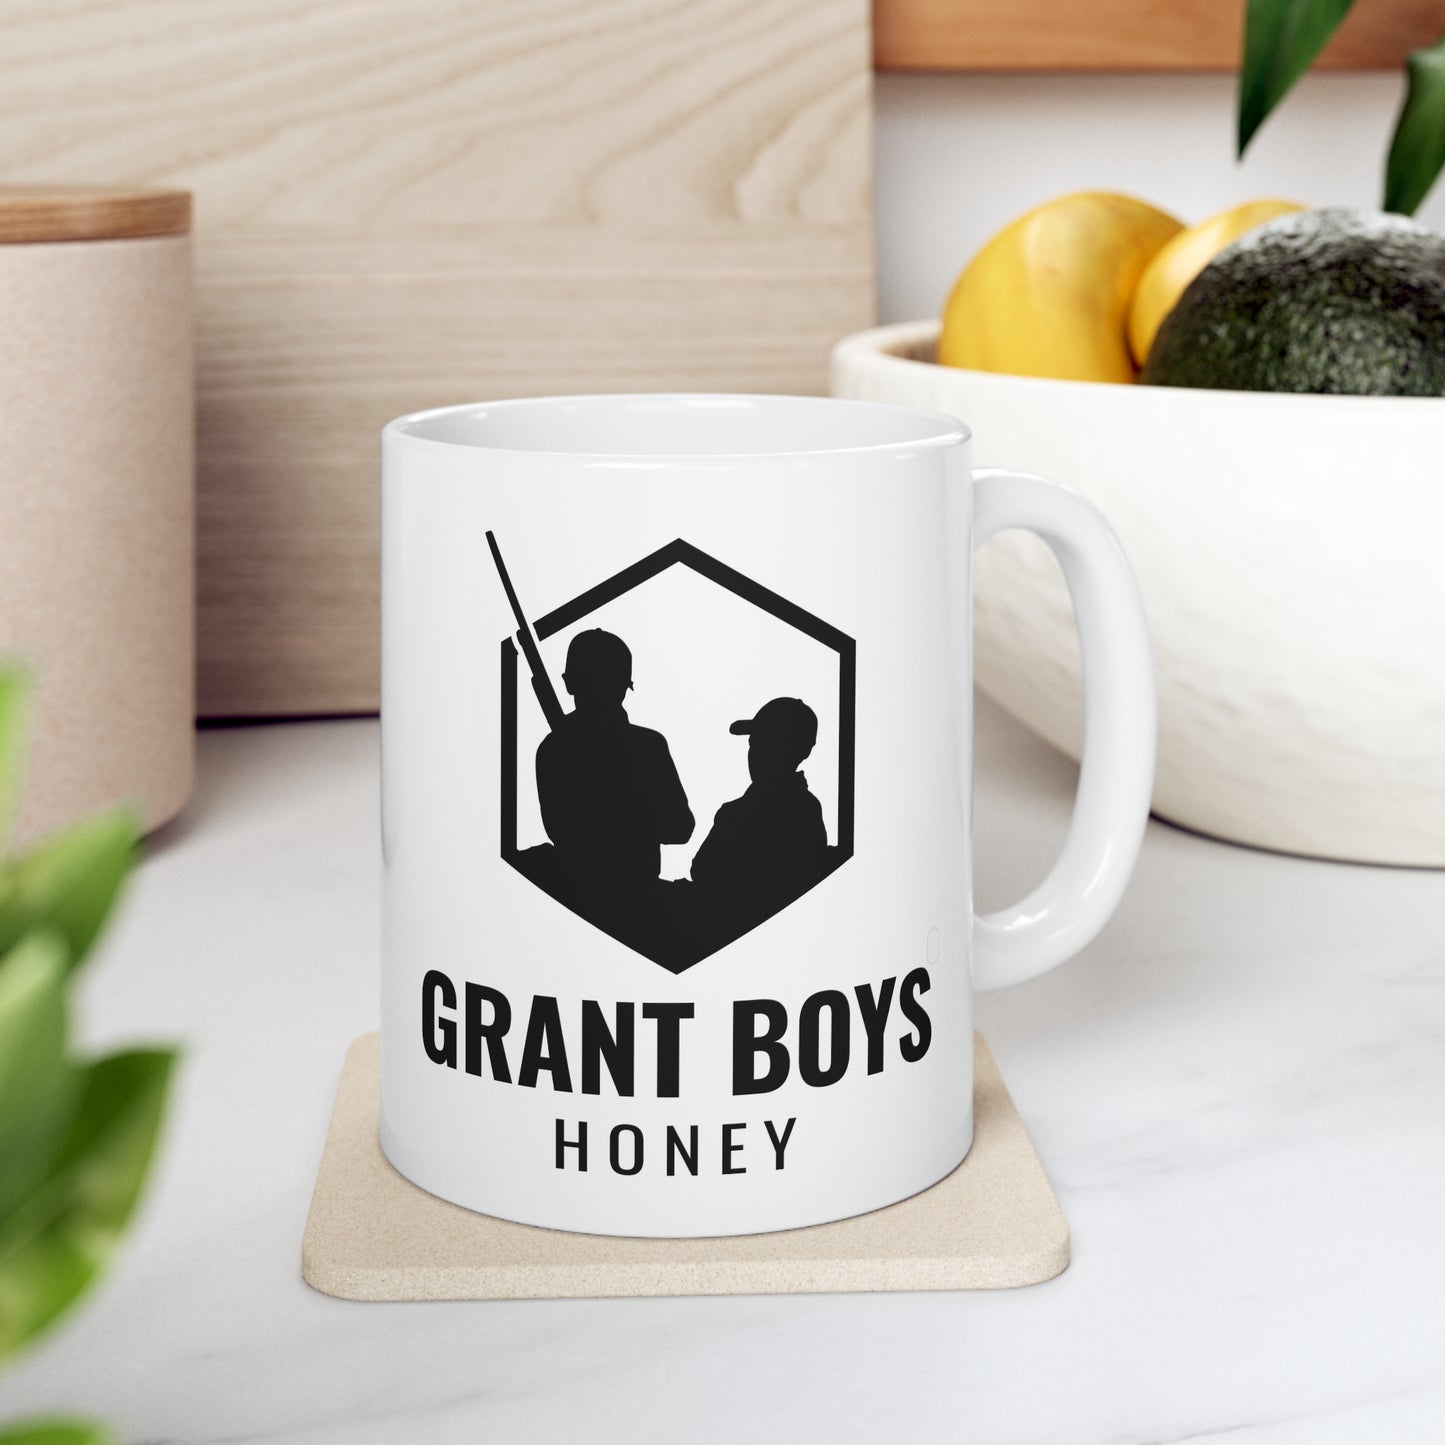 Grant Boys Honey Ceramic Mug 11oz